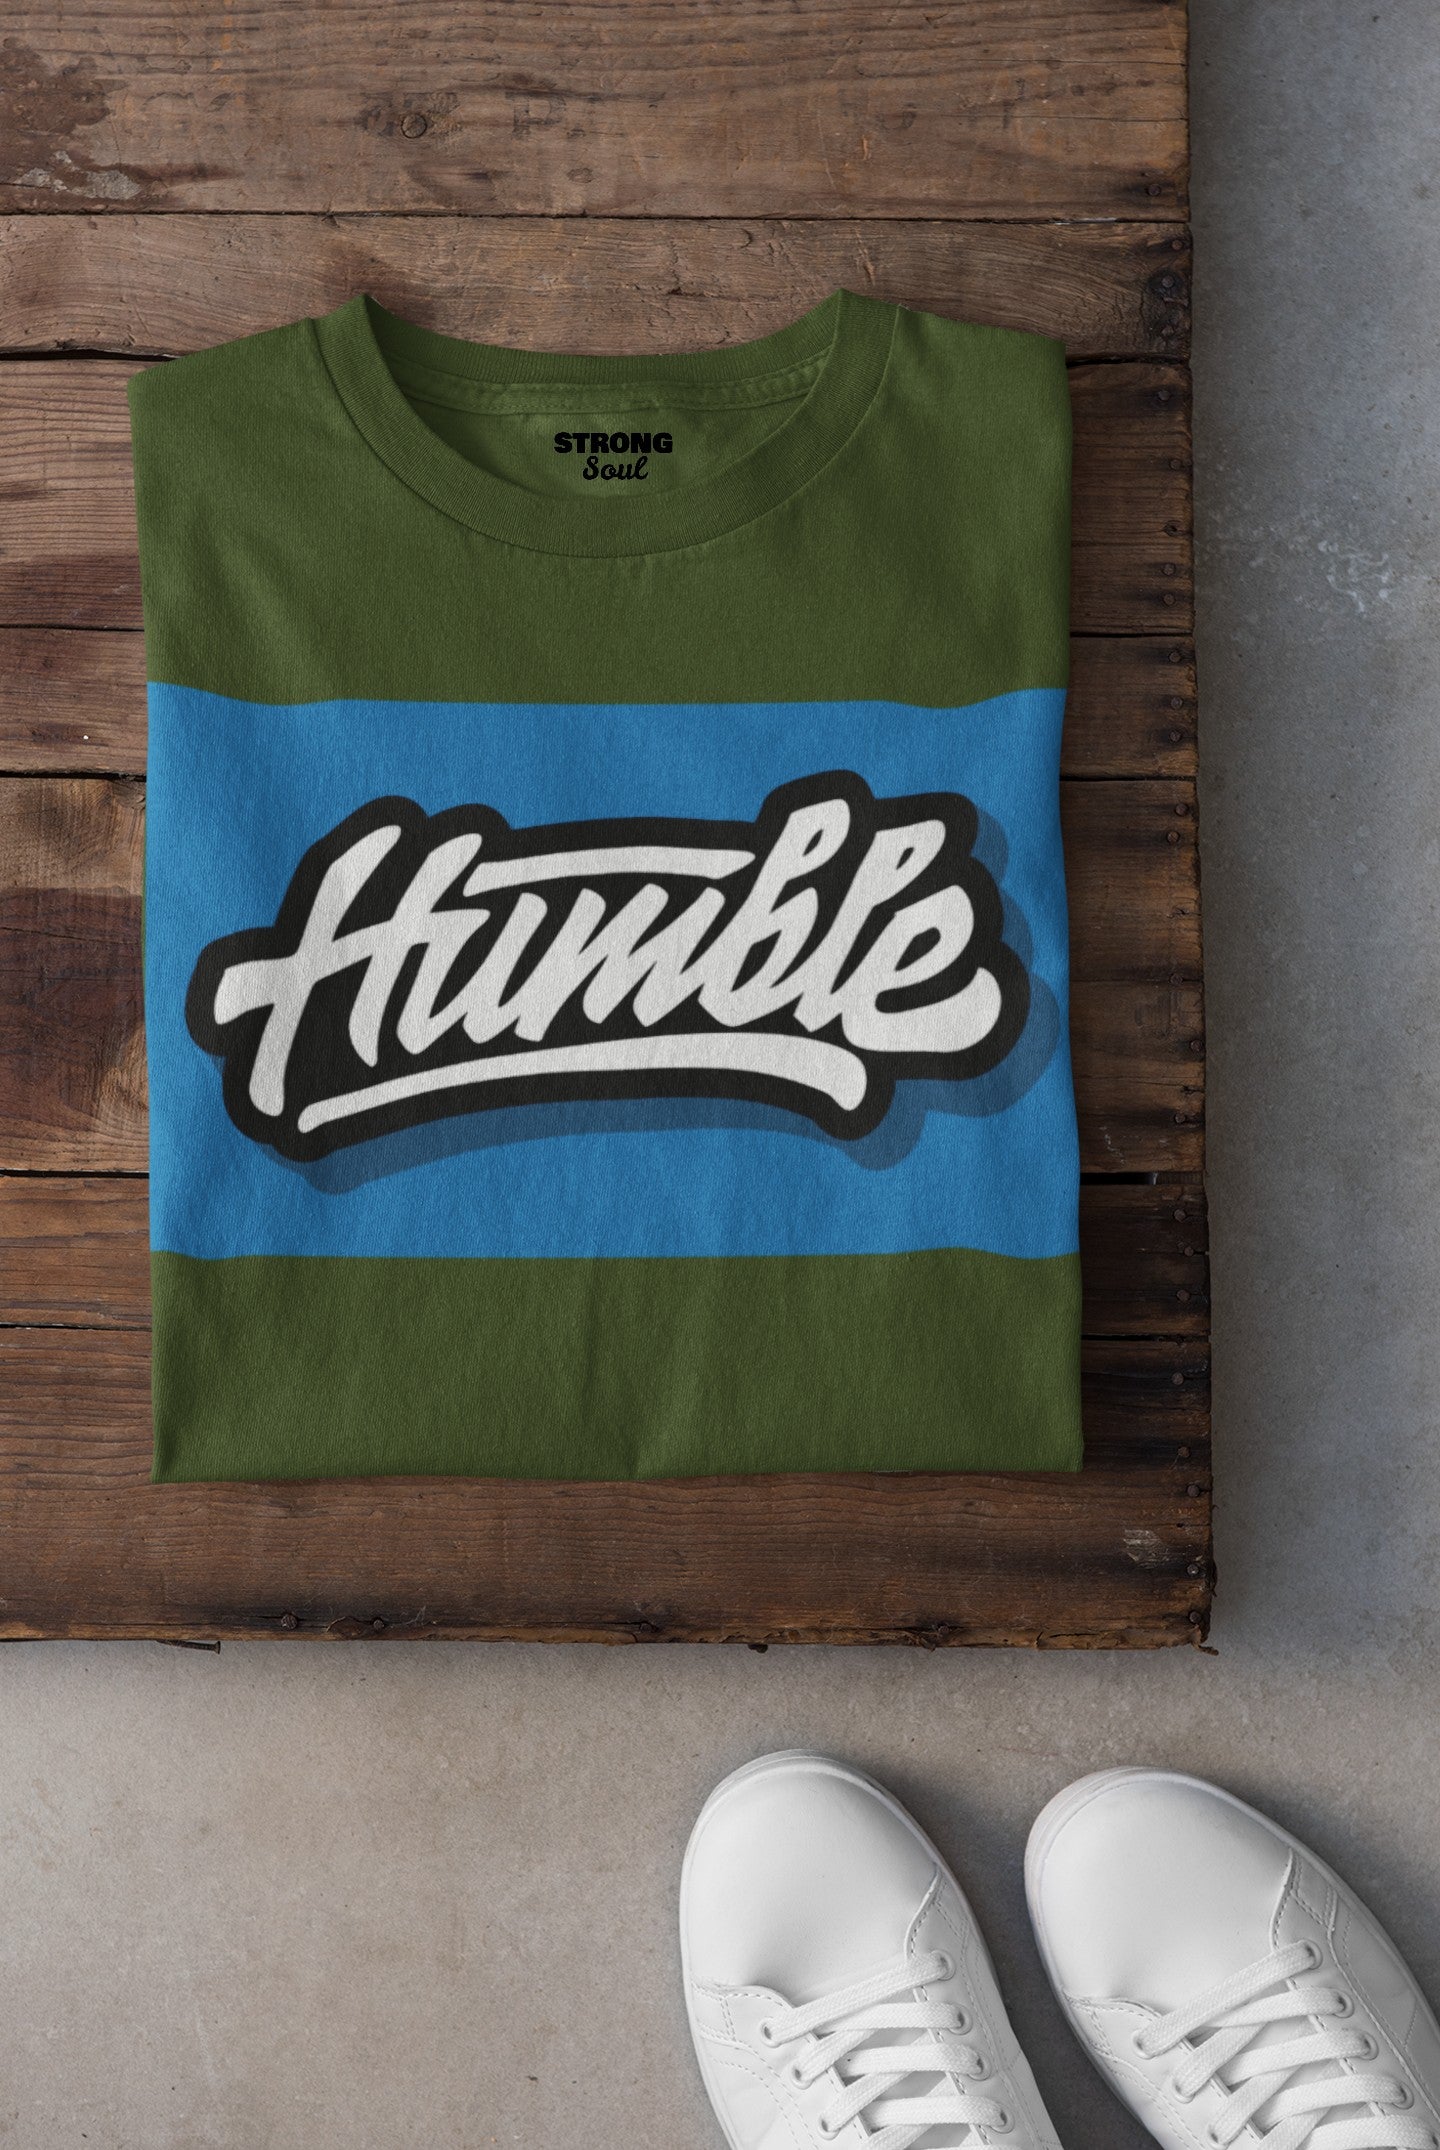 Gym T Shirt - Humble - Strong Soul - Sports T Shirt